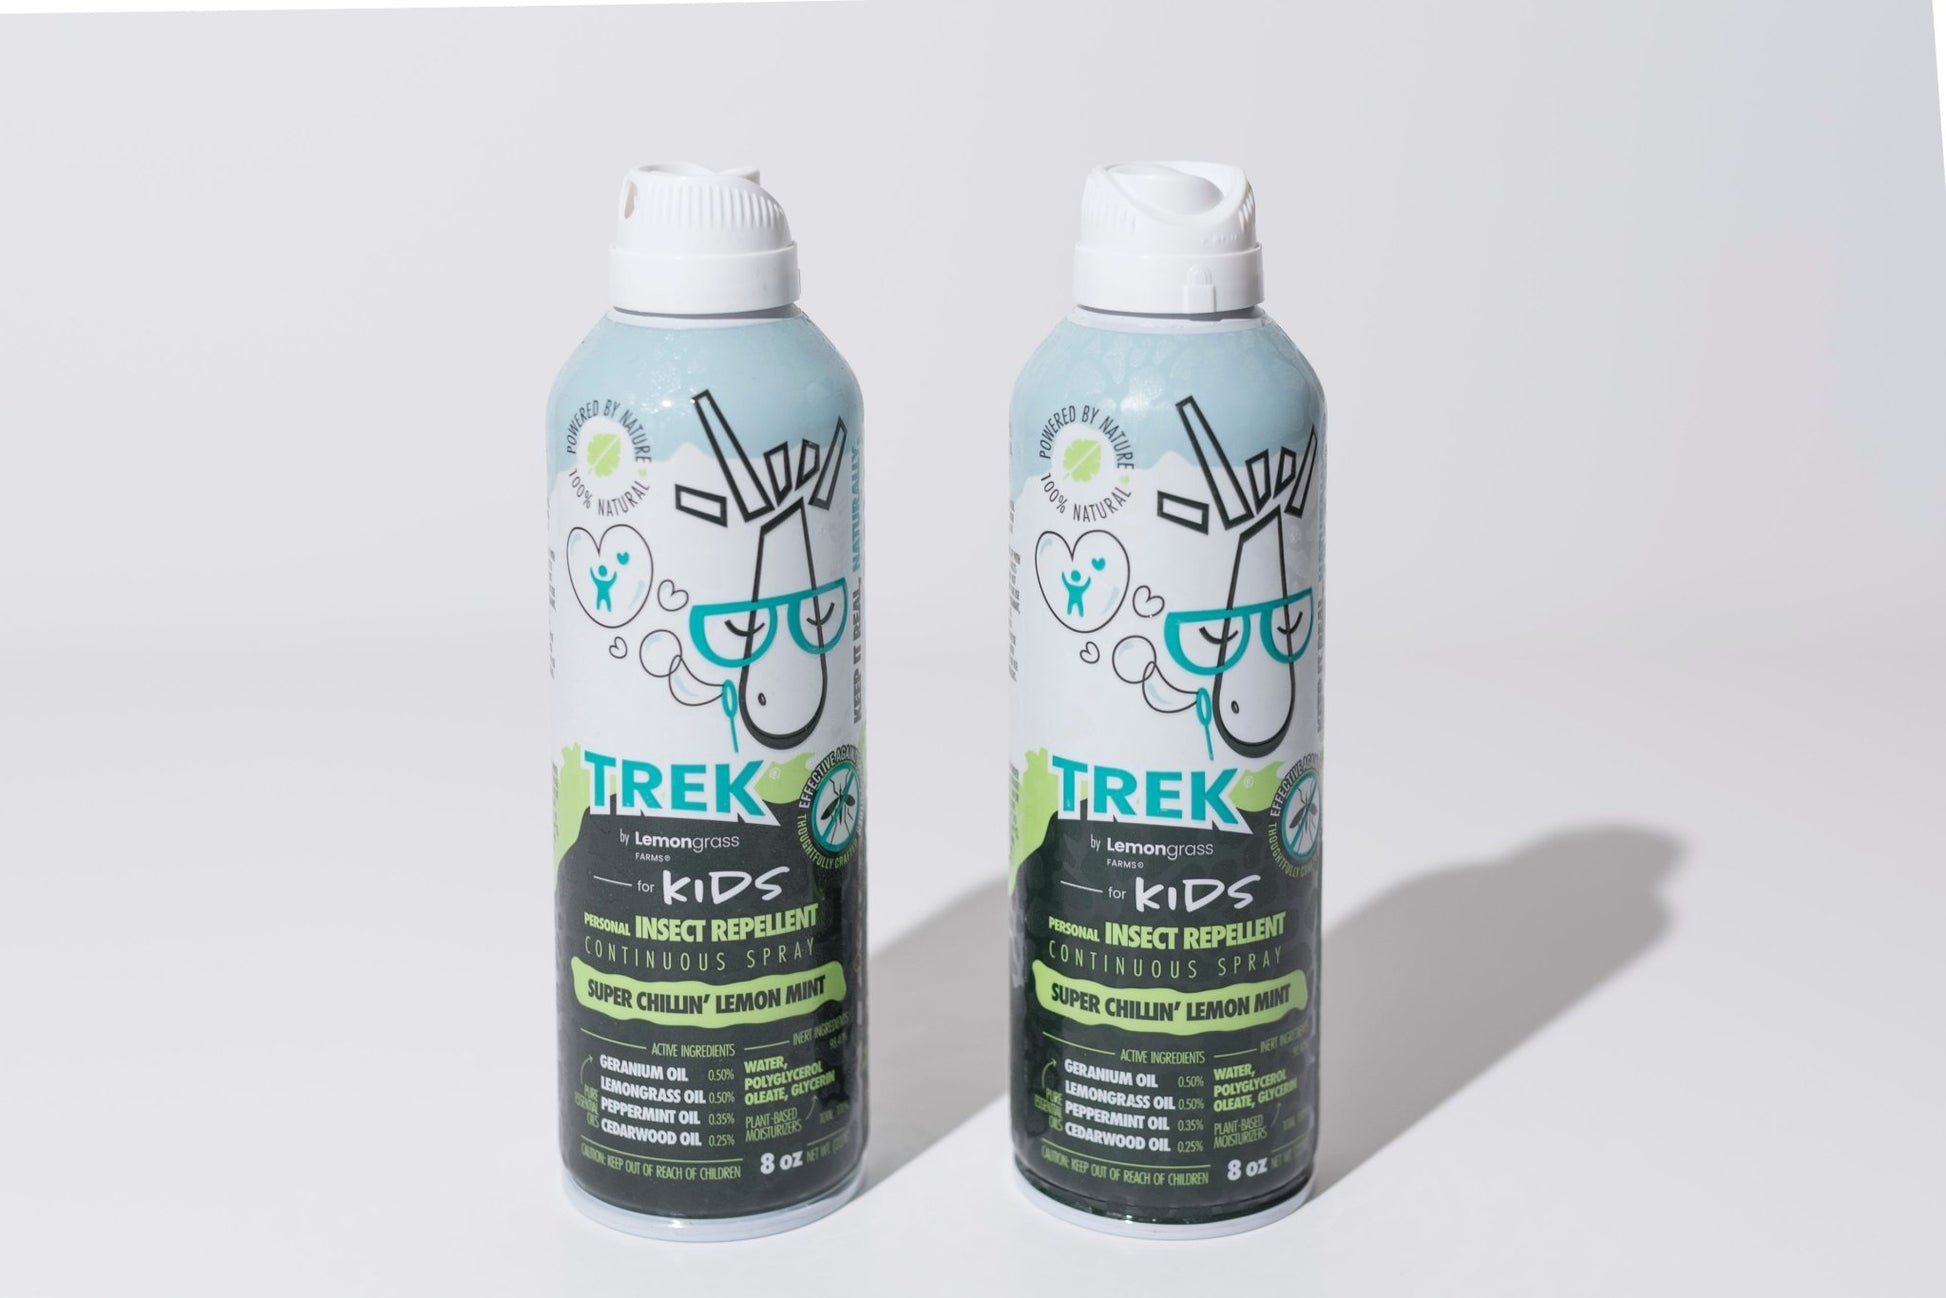 TREK & TREK for Kids combo - displayer with base - Tree Spirit Wellness